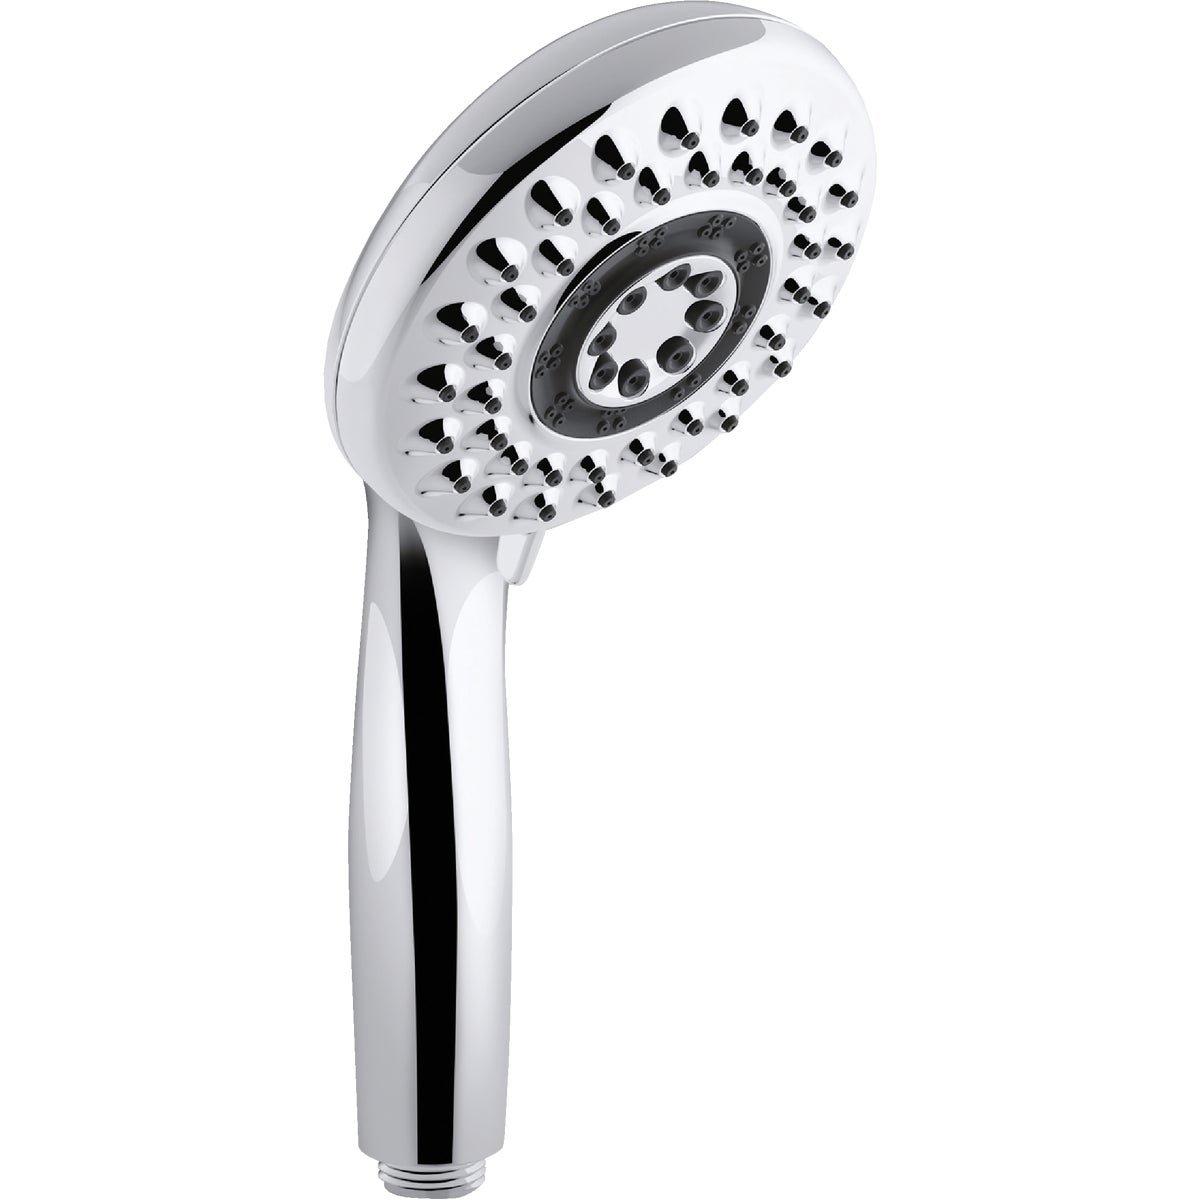 Item 404367, Enlighten 1.75 GPM (gallons per minute) multifunction handheld shower.